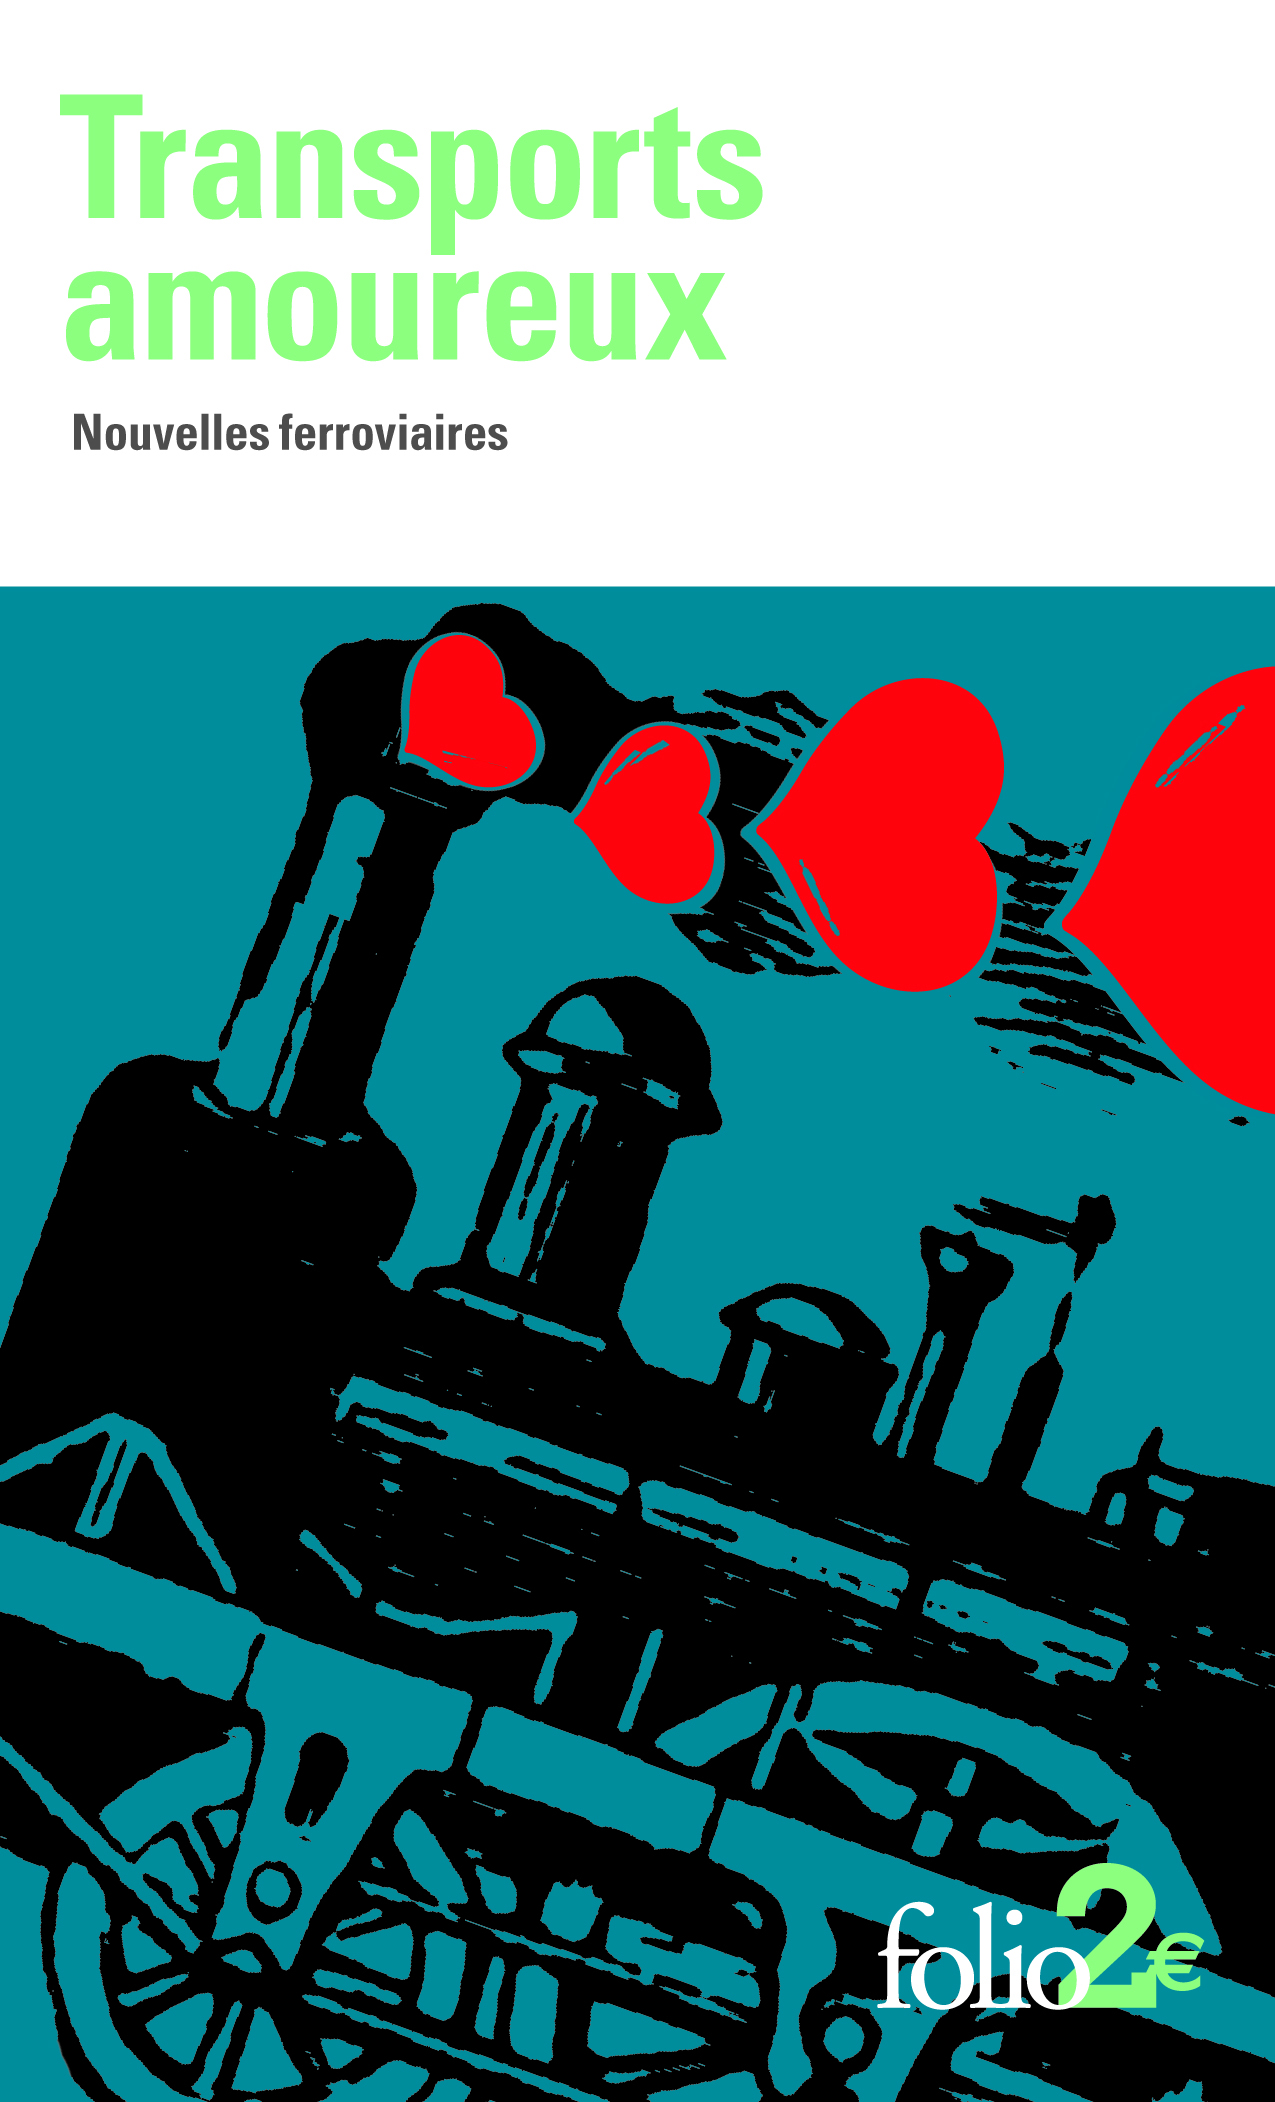 Transports amoureux, Nouvelles ferroviaires (9782070462582-front-cover)